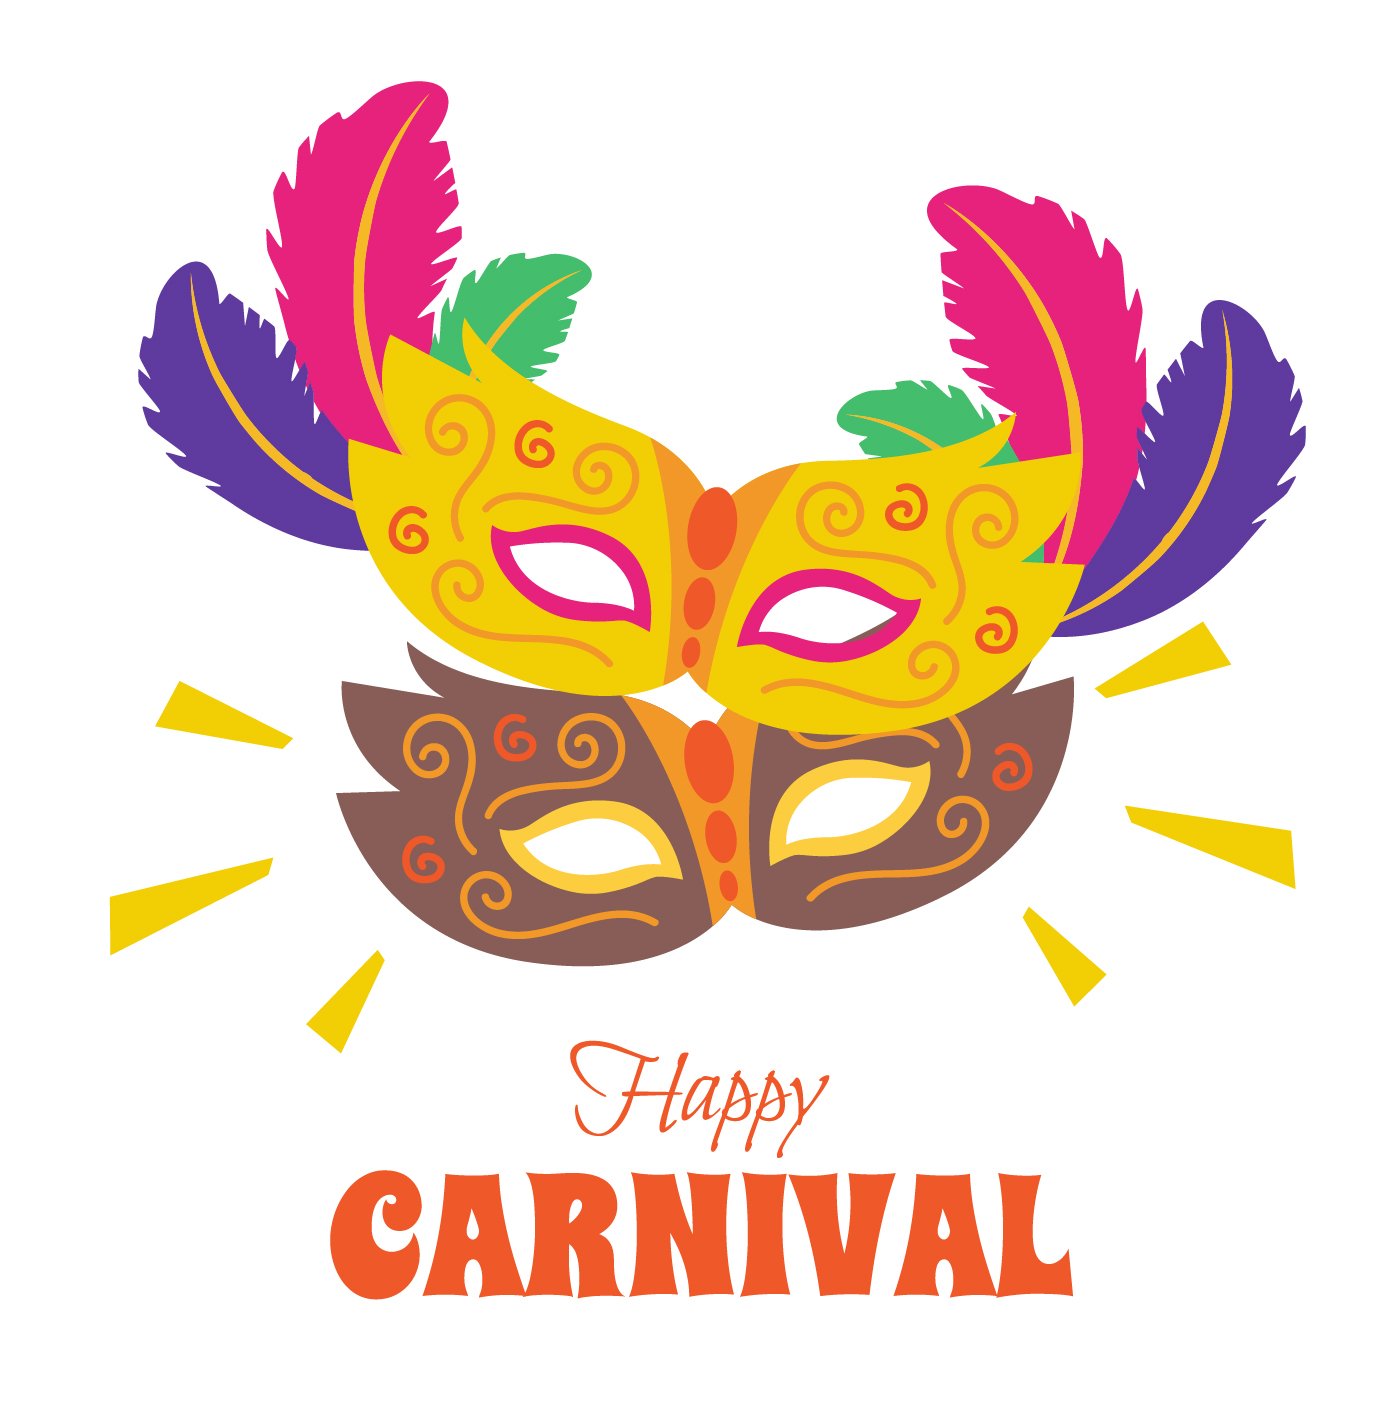 Free Carnival Festival Illustration in Illustrator, PSD, EPS, SVG, JPG, PNG